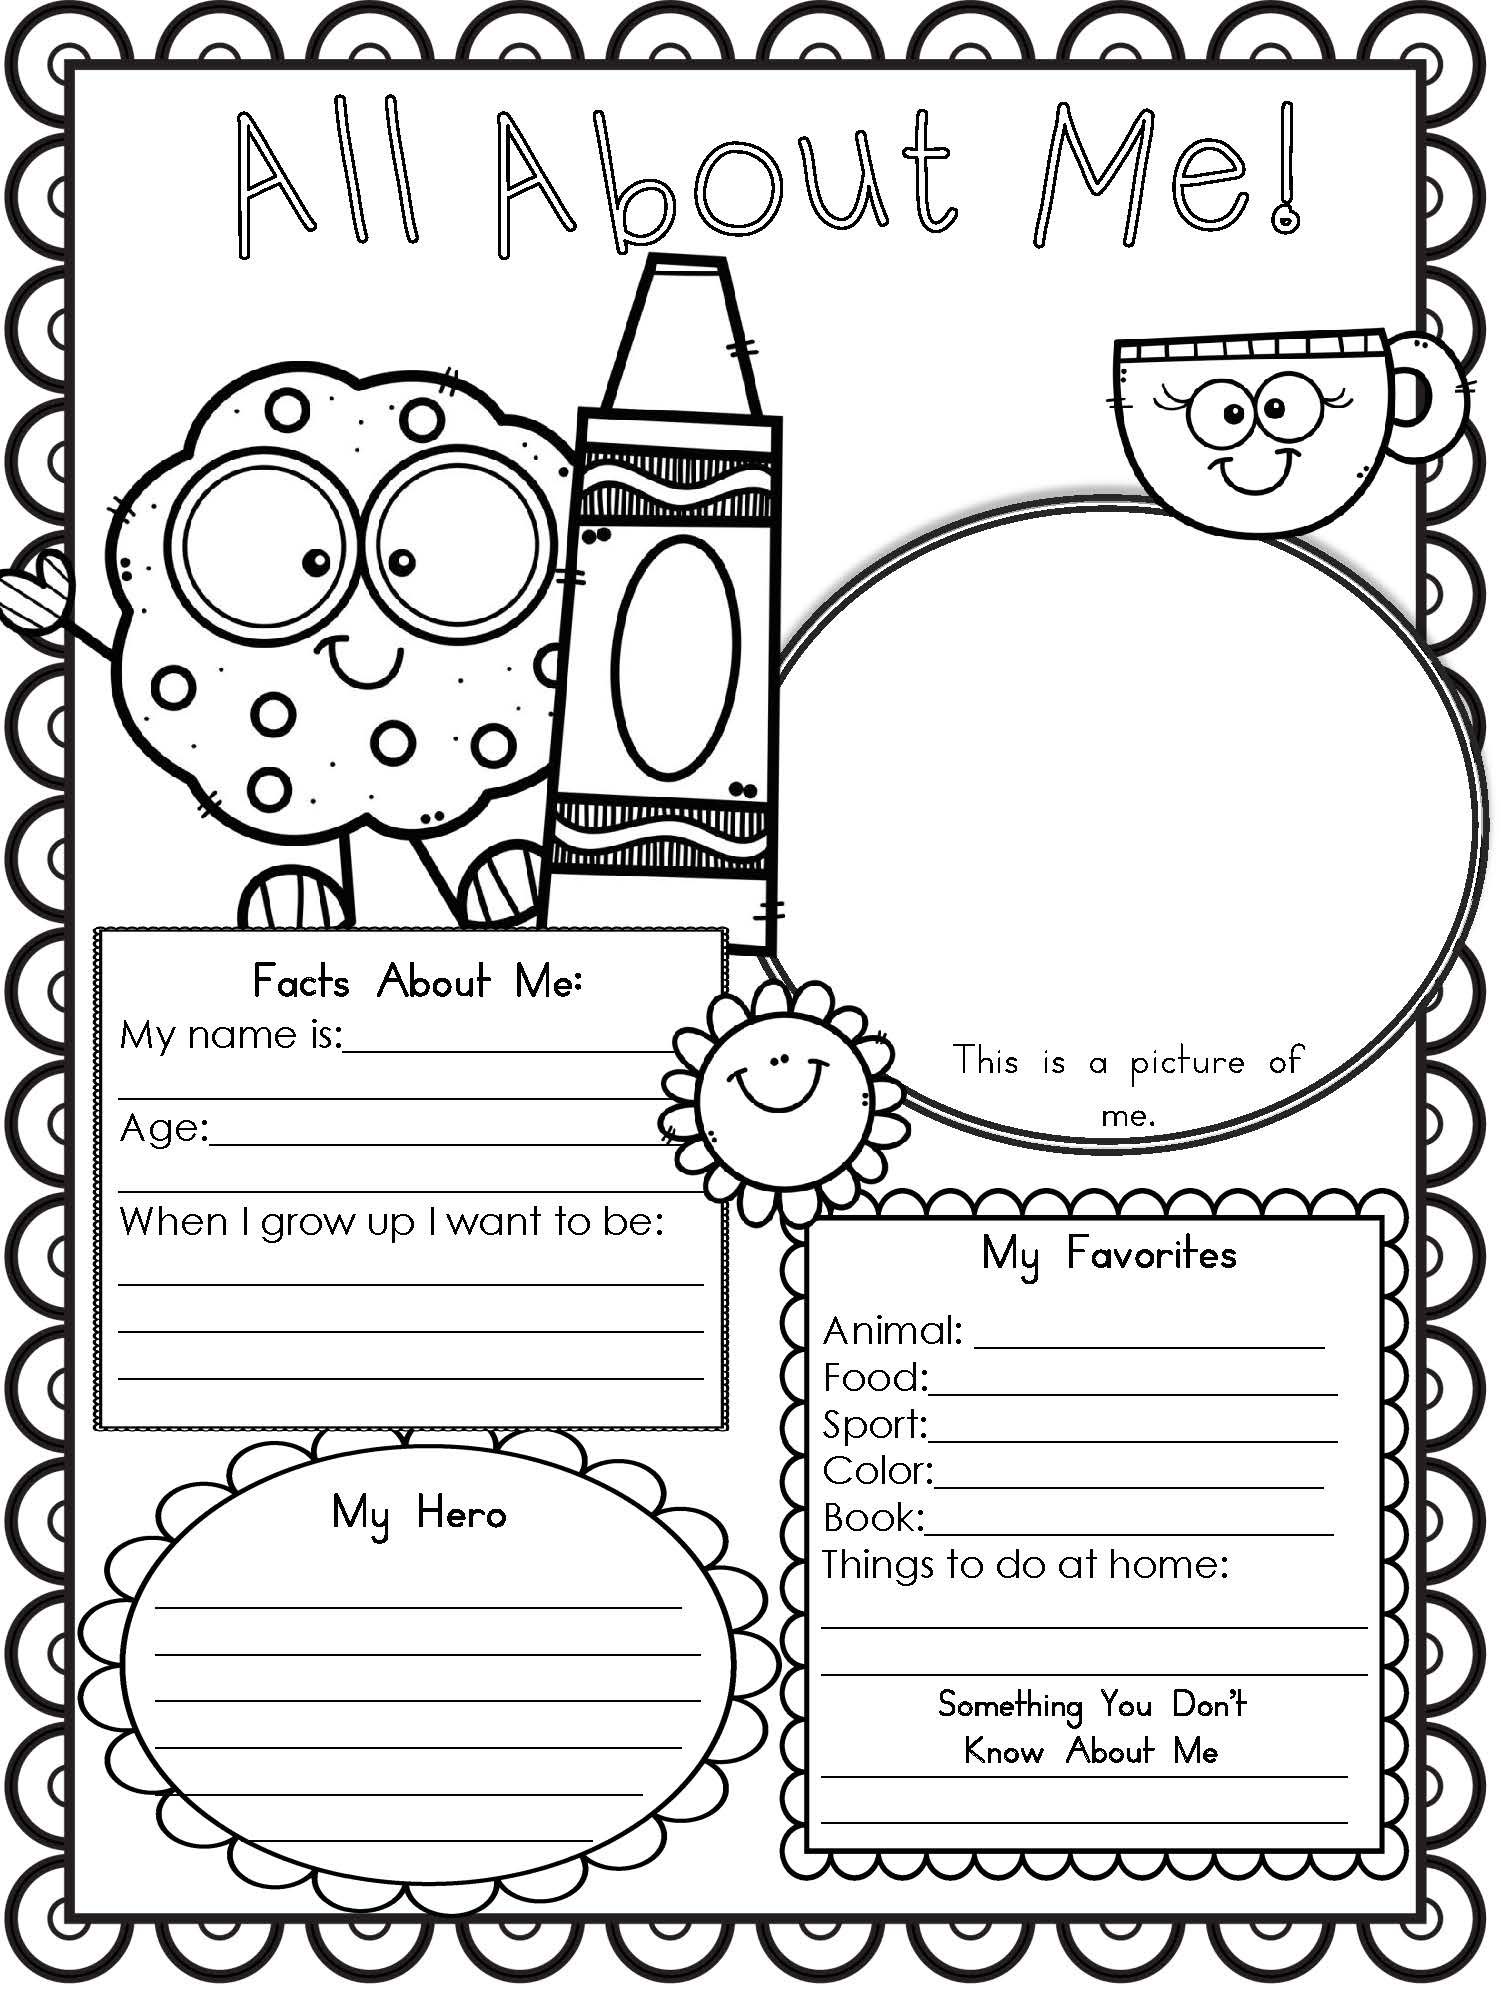 Preschool &amp;amp; Kindergarten Archives - Modern Homeschool Family | All About Me Worksheet Preschool Printable